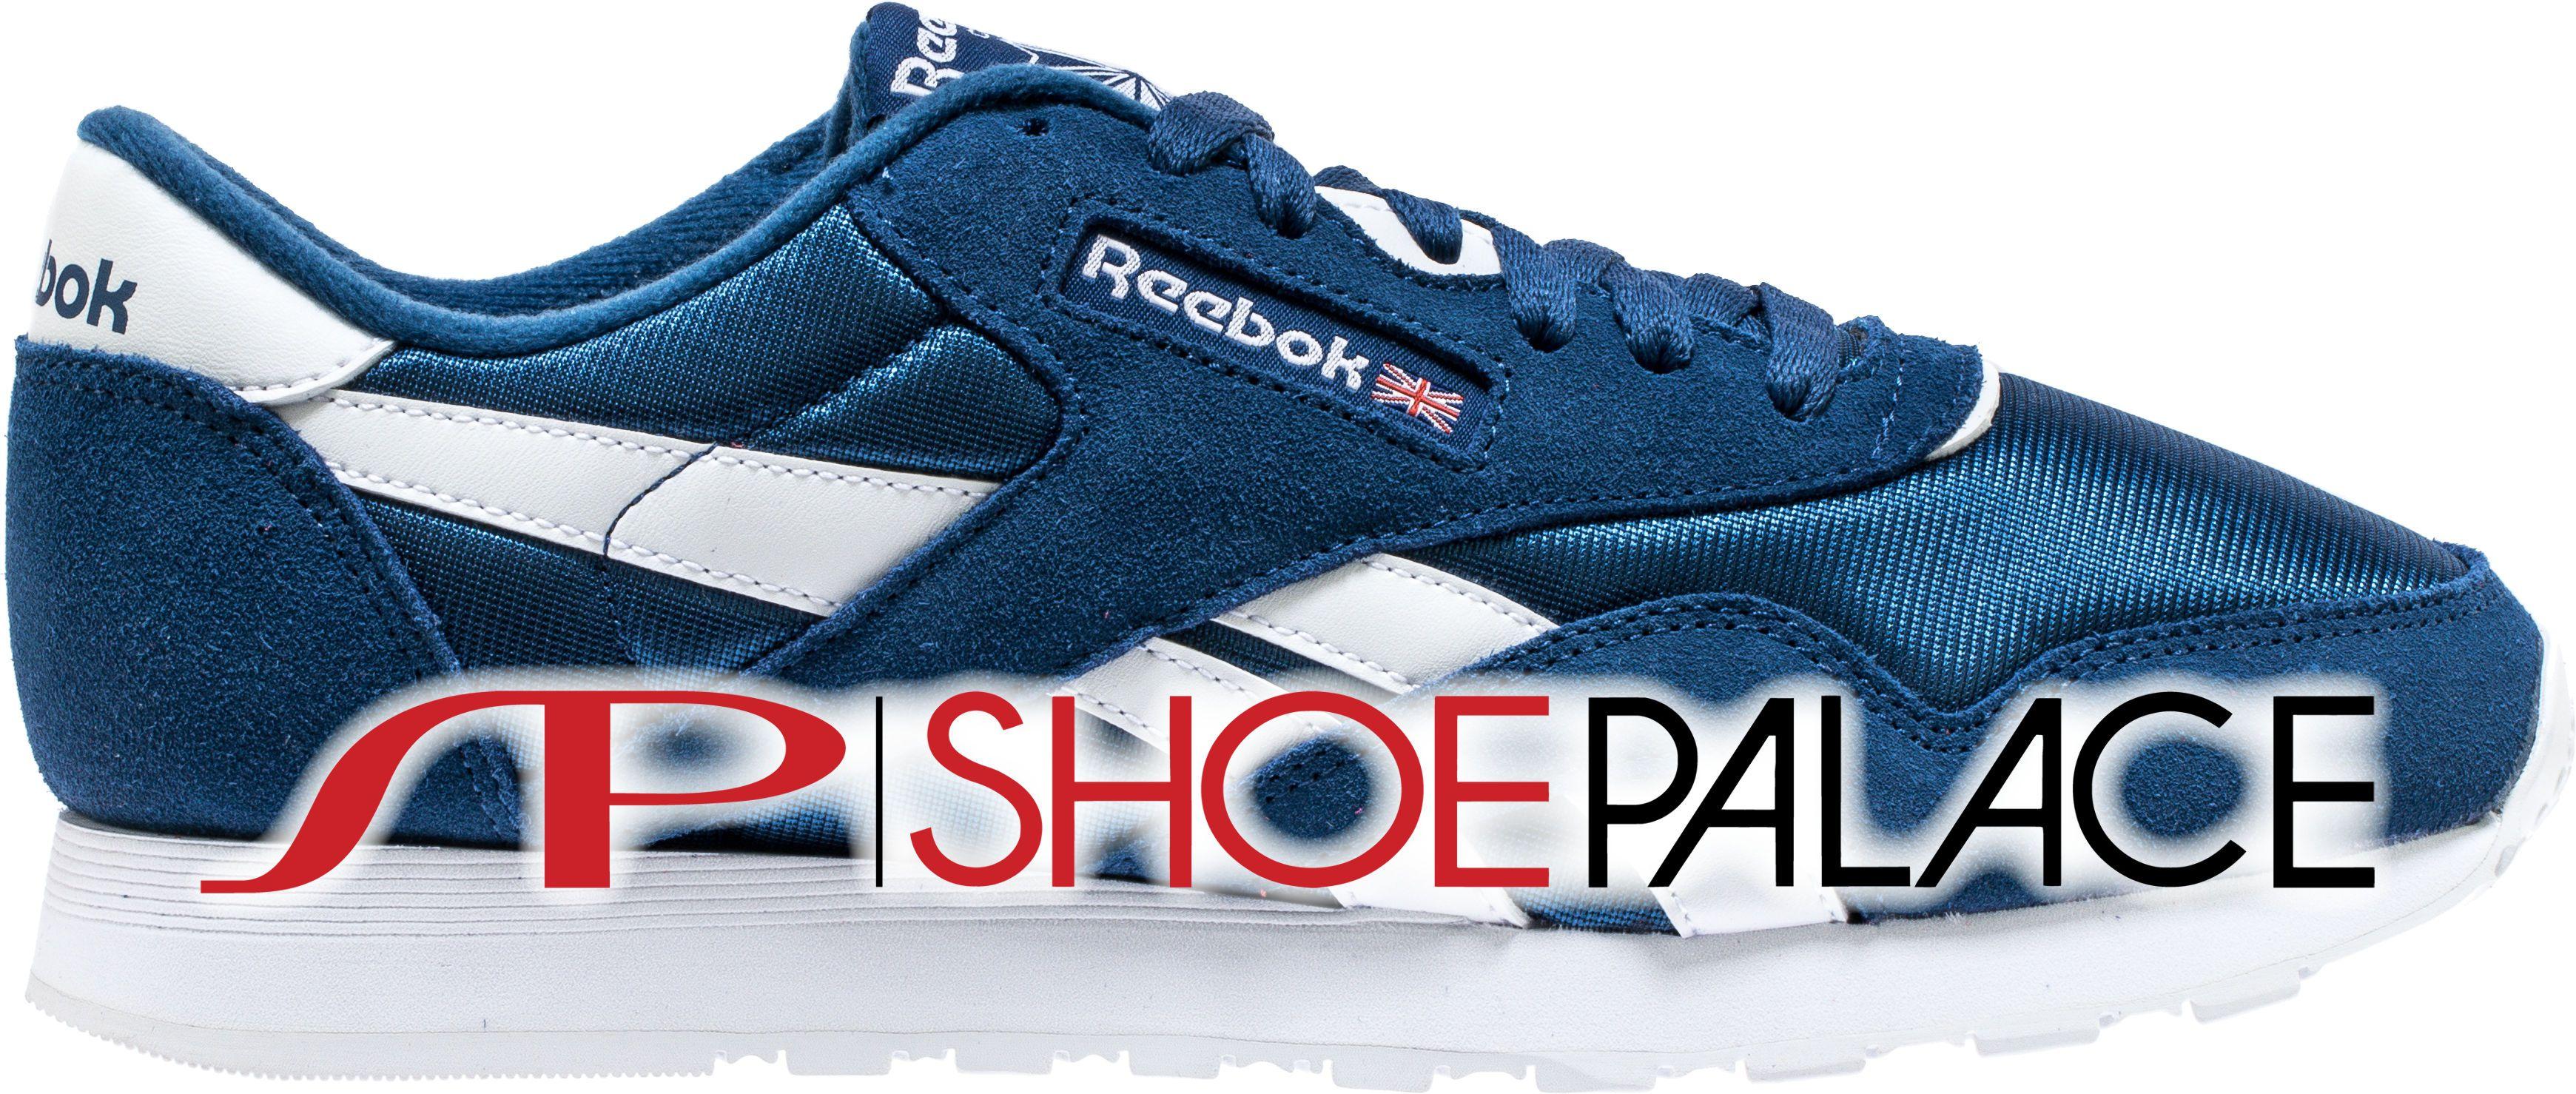 White and Blue Shoe Brand Logo - Reebok CN3267 Classic Nylon Mens Lifestyle Shoe (Bunker Blue/White ...